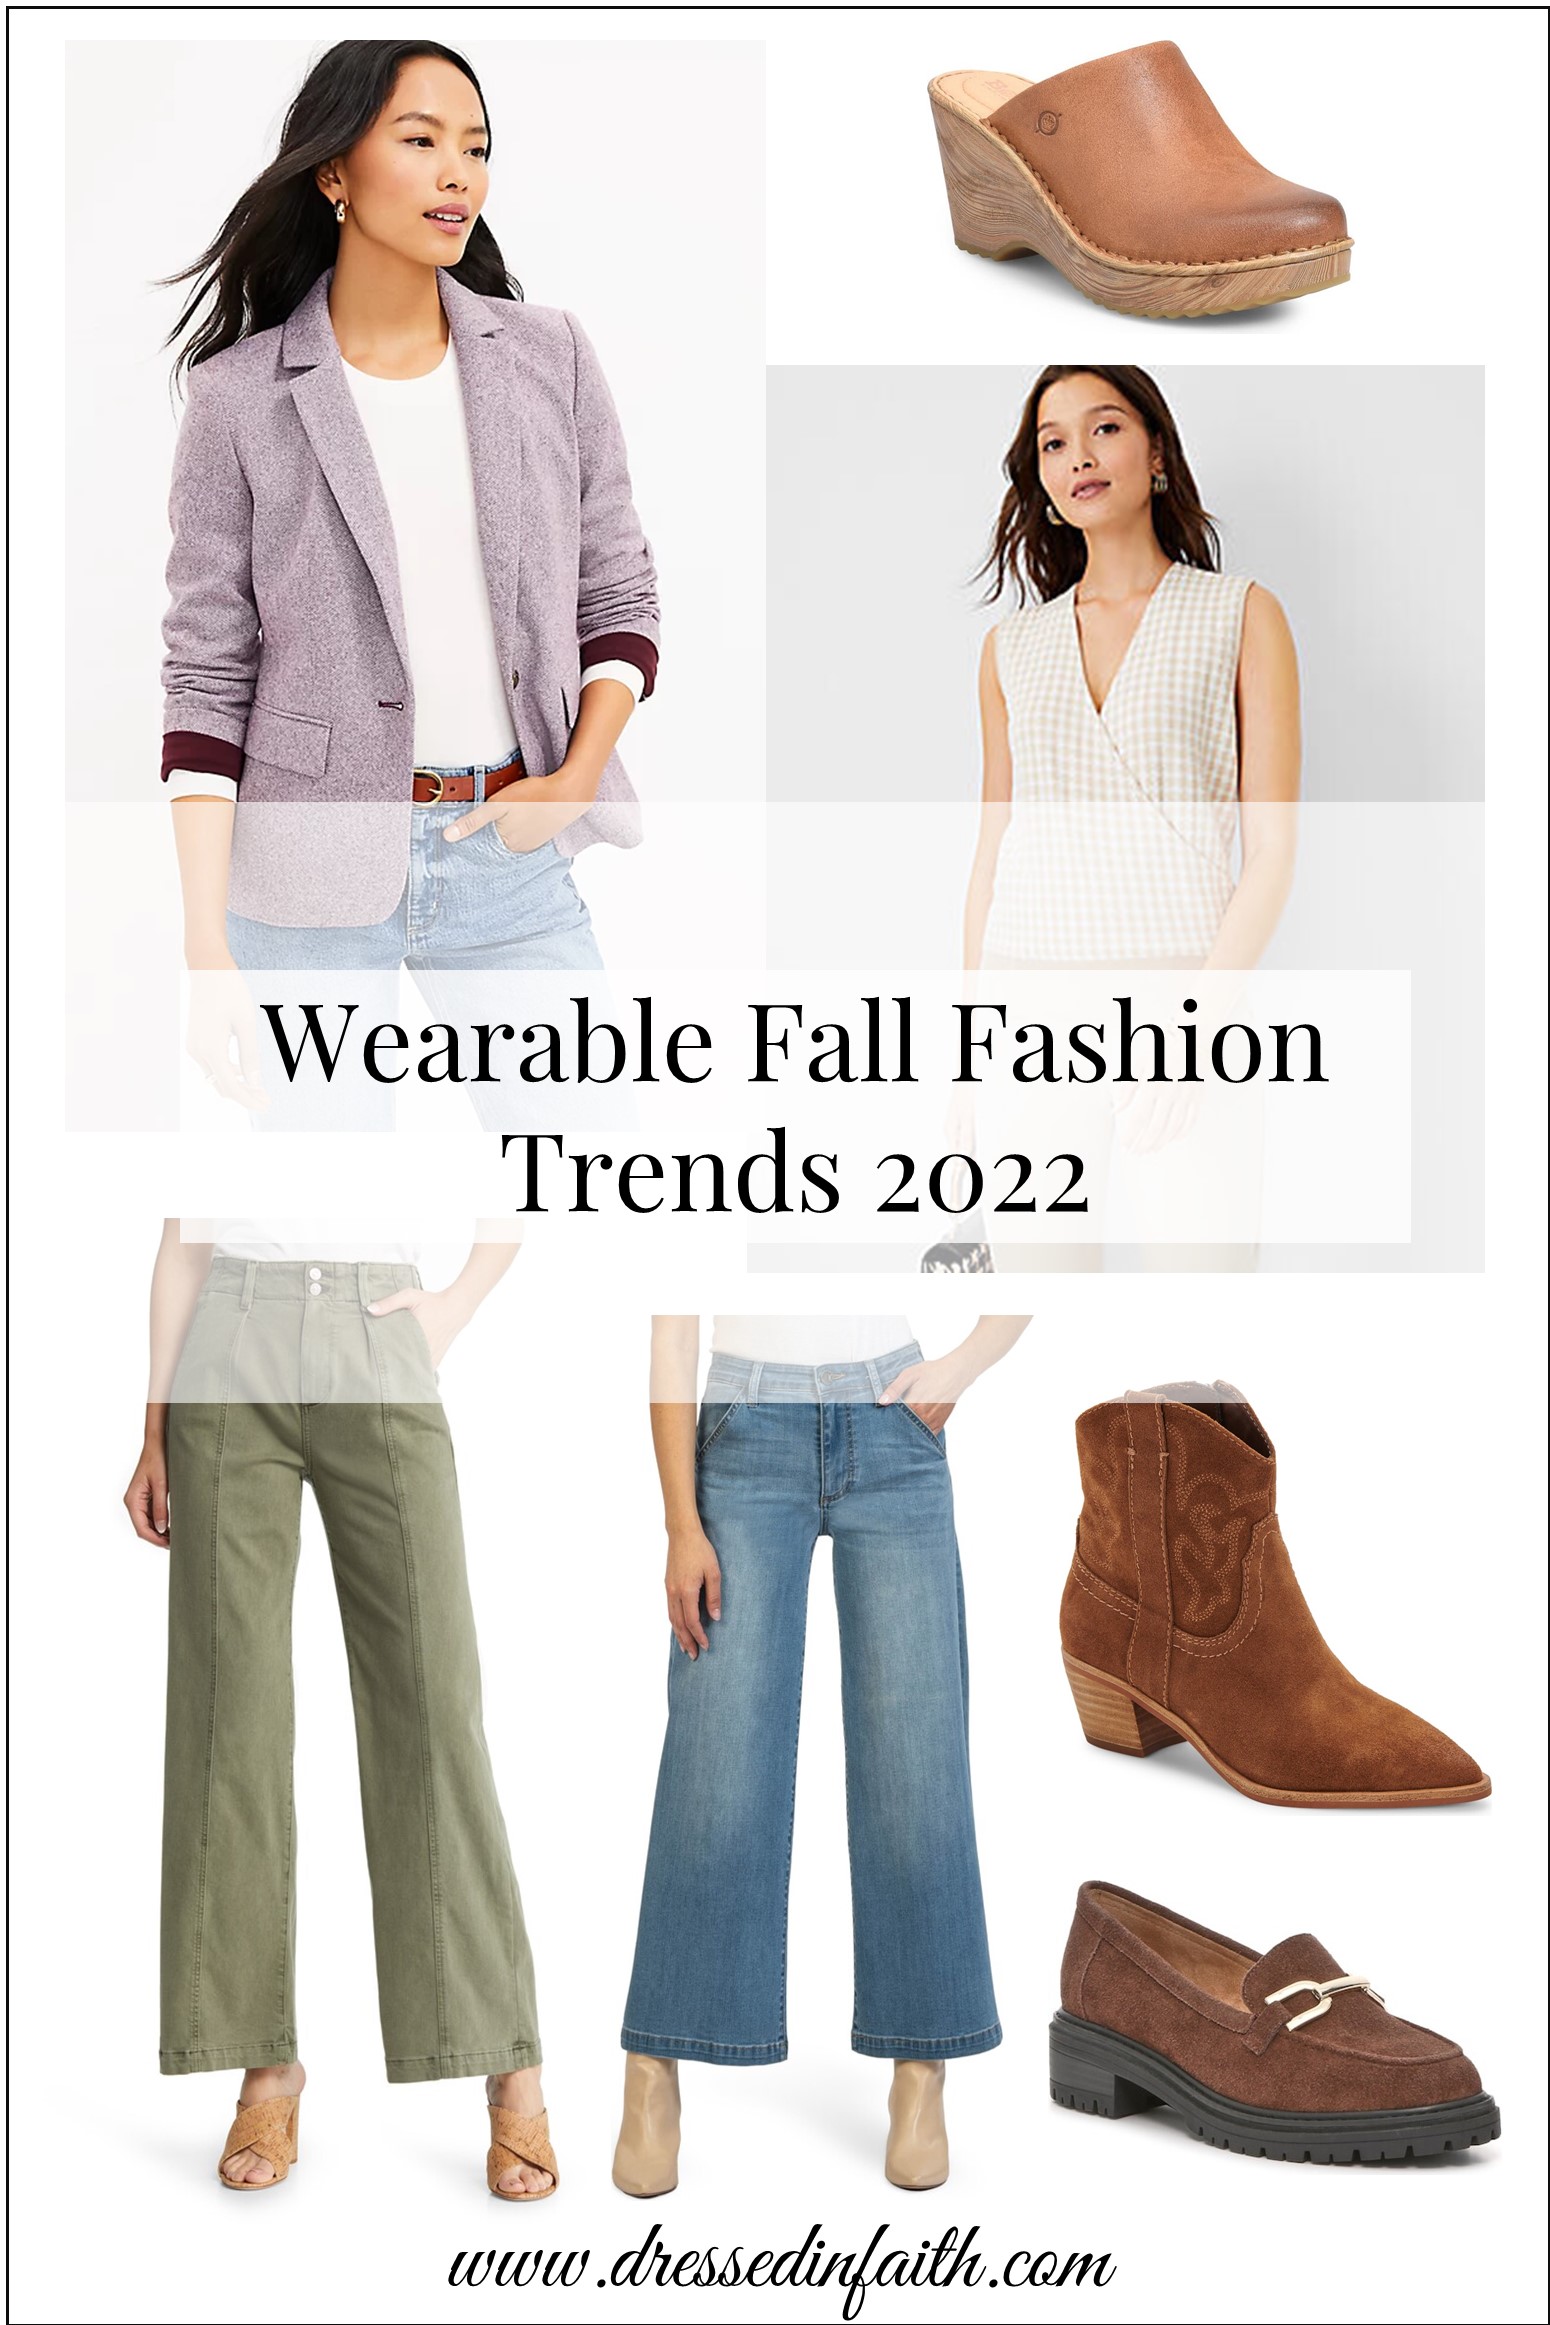 https://www.dressedinfaith.com/wp-content/uploads/2022/08/Wearable-Fall-Fashion-Trends-2022.jpg